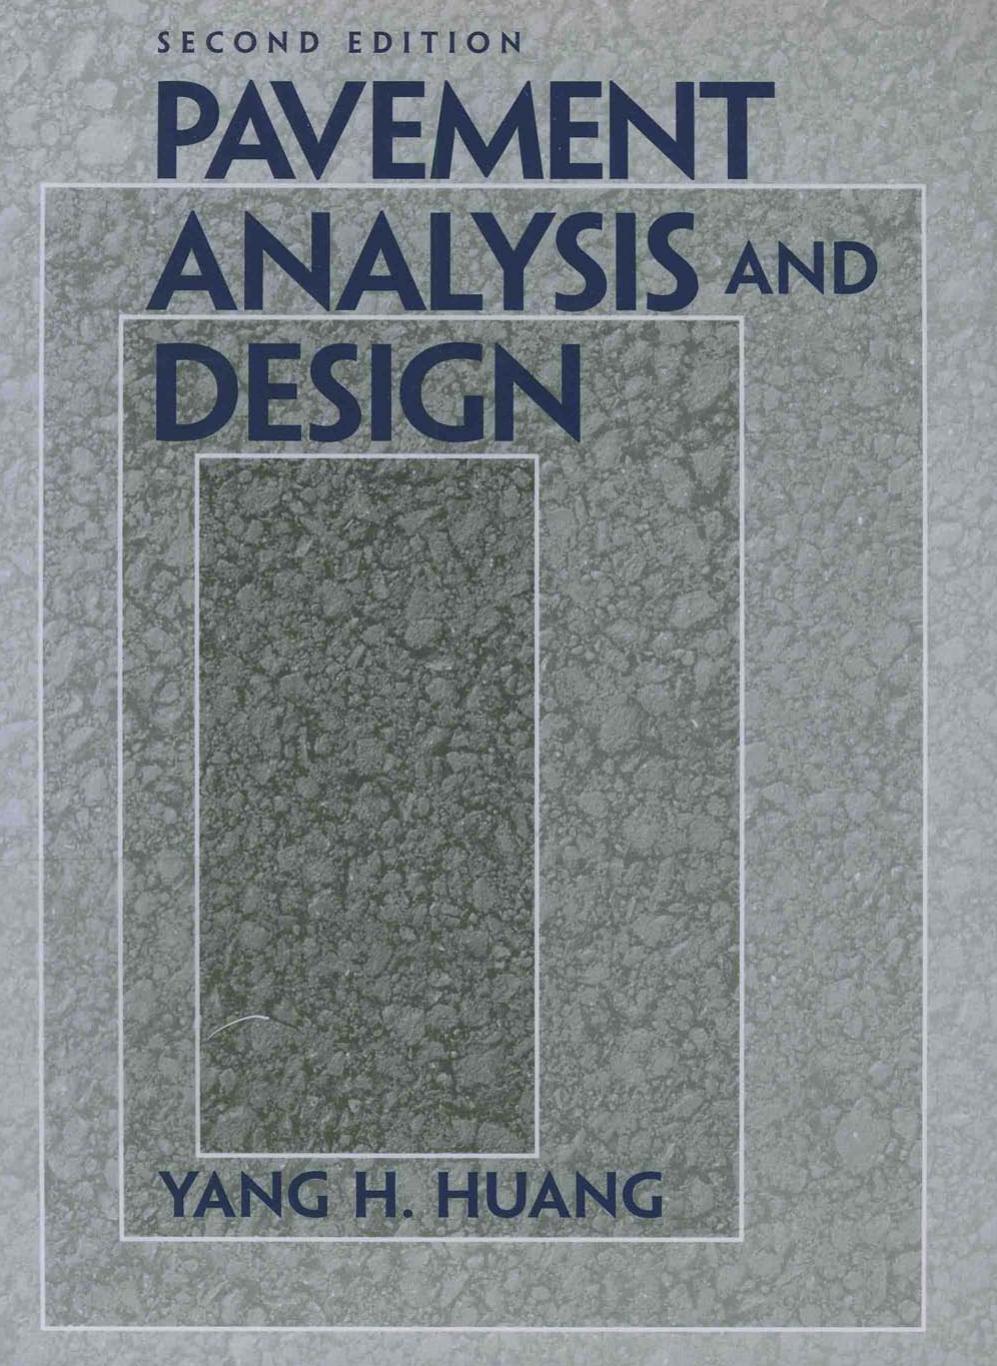 Pavement Analysis and Design 2nd edition (1) - Wei Zhi.jpg